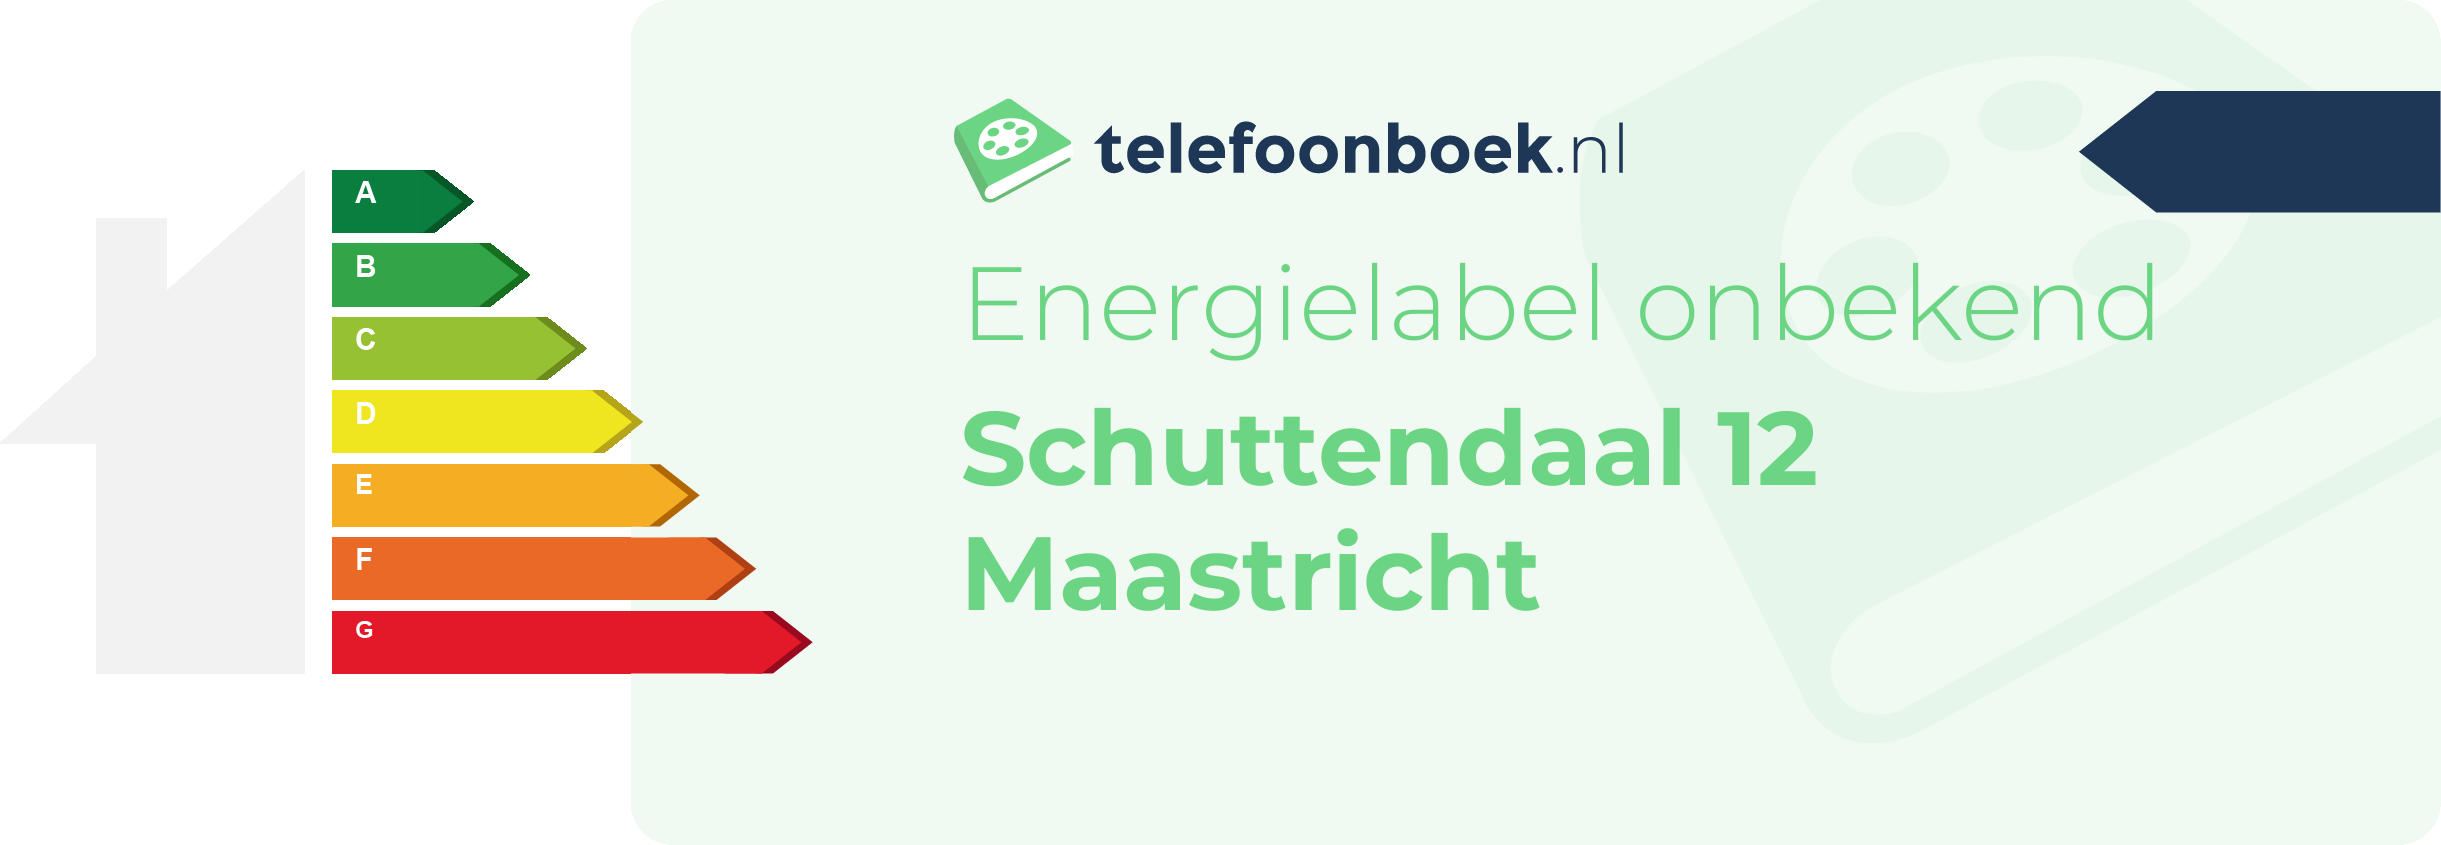 Energielabel Schuttendaal 12 Maastricht